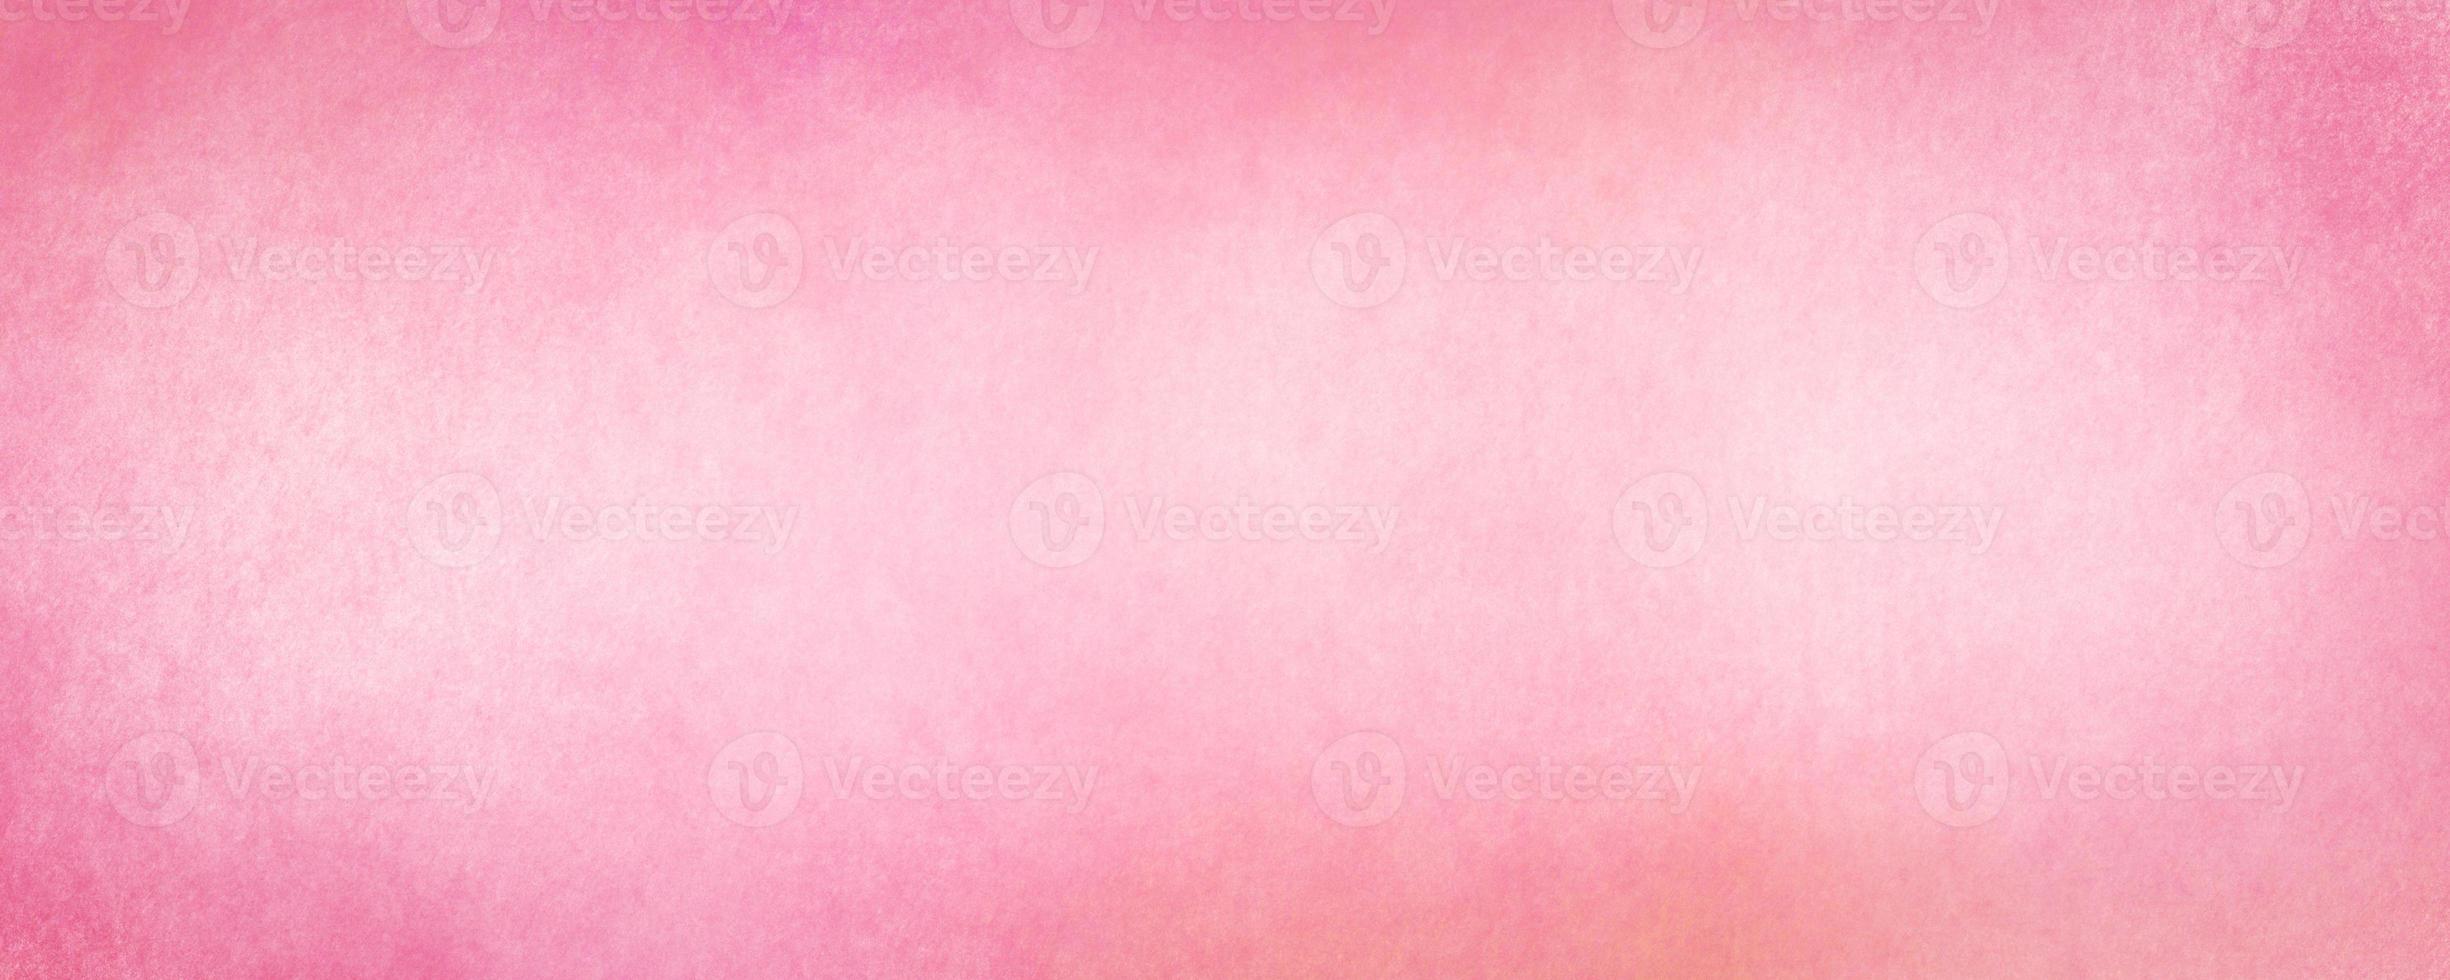 abstrakter rosafarbener Hintergrund mit Aquarellfarbe foto